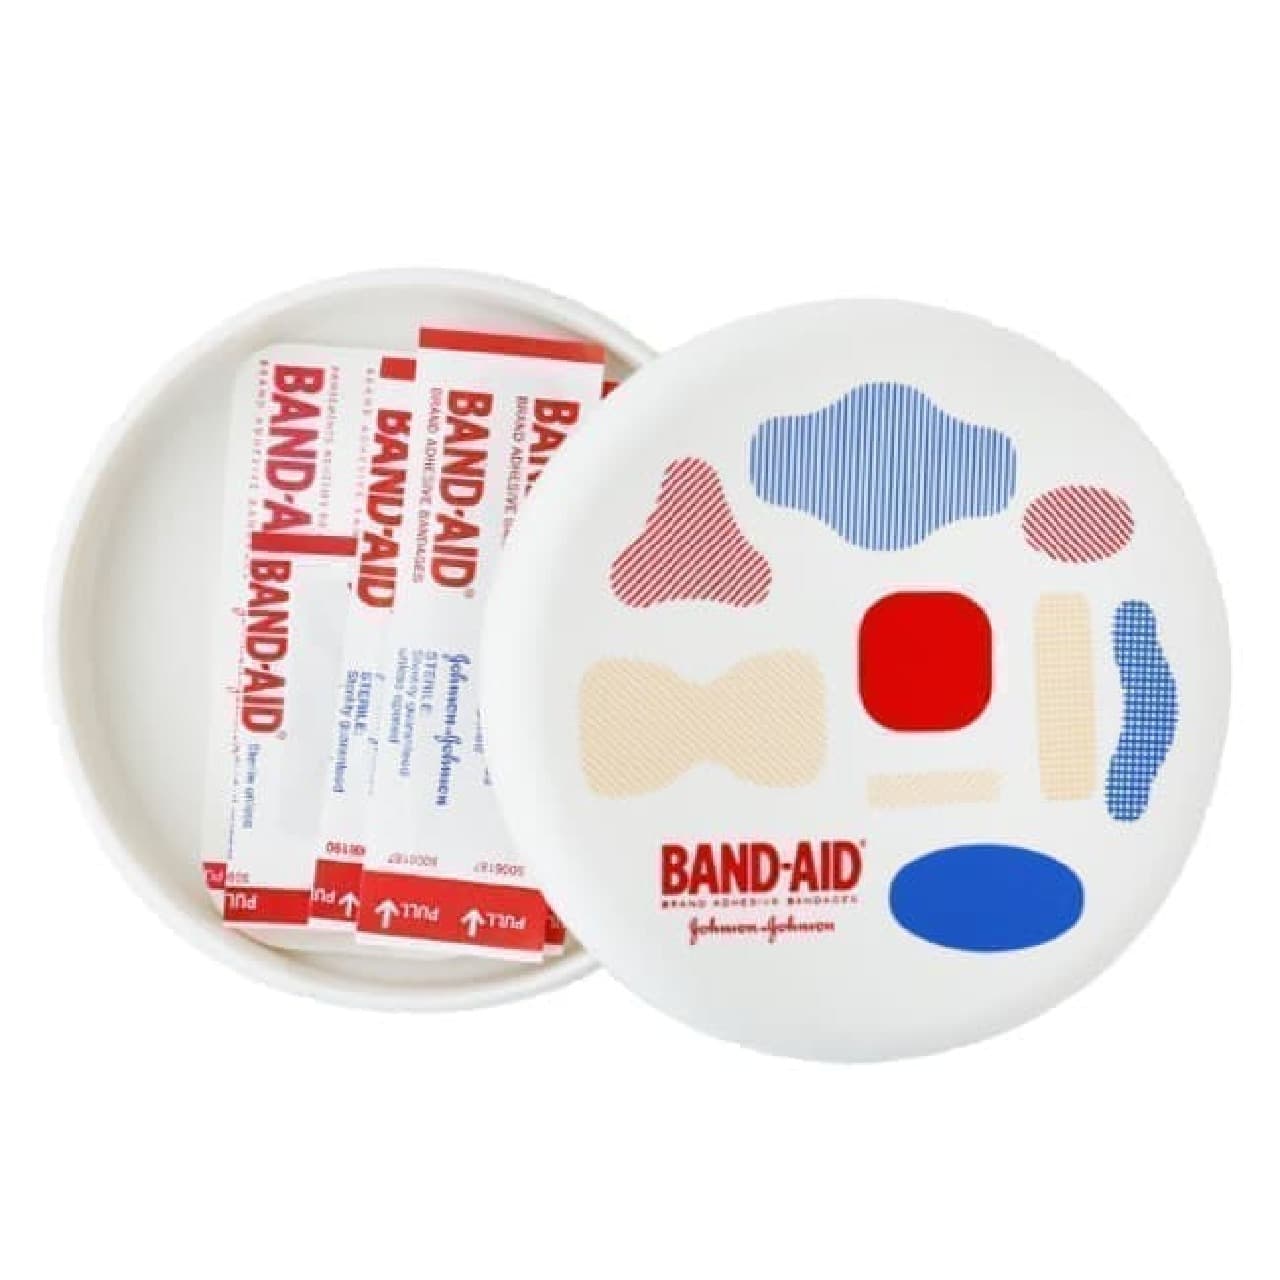 Band-Aid original stocker (with magnet) set